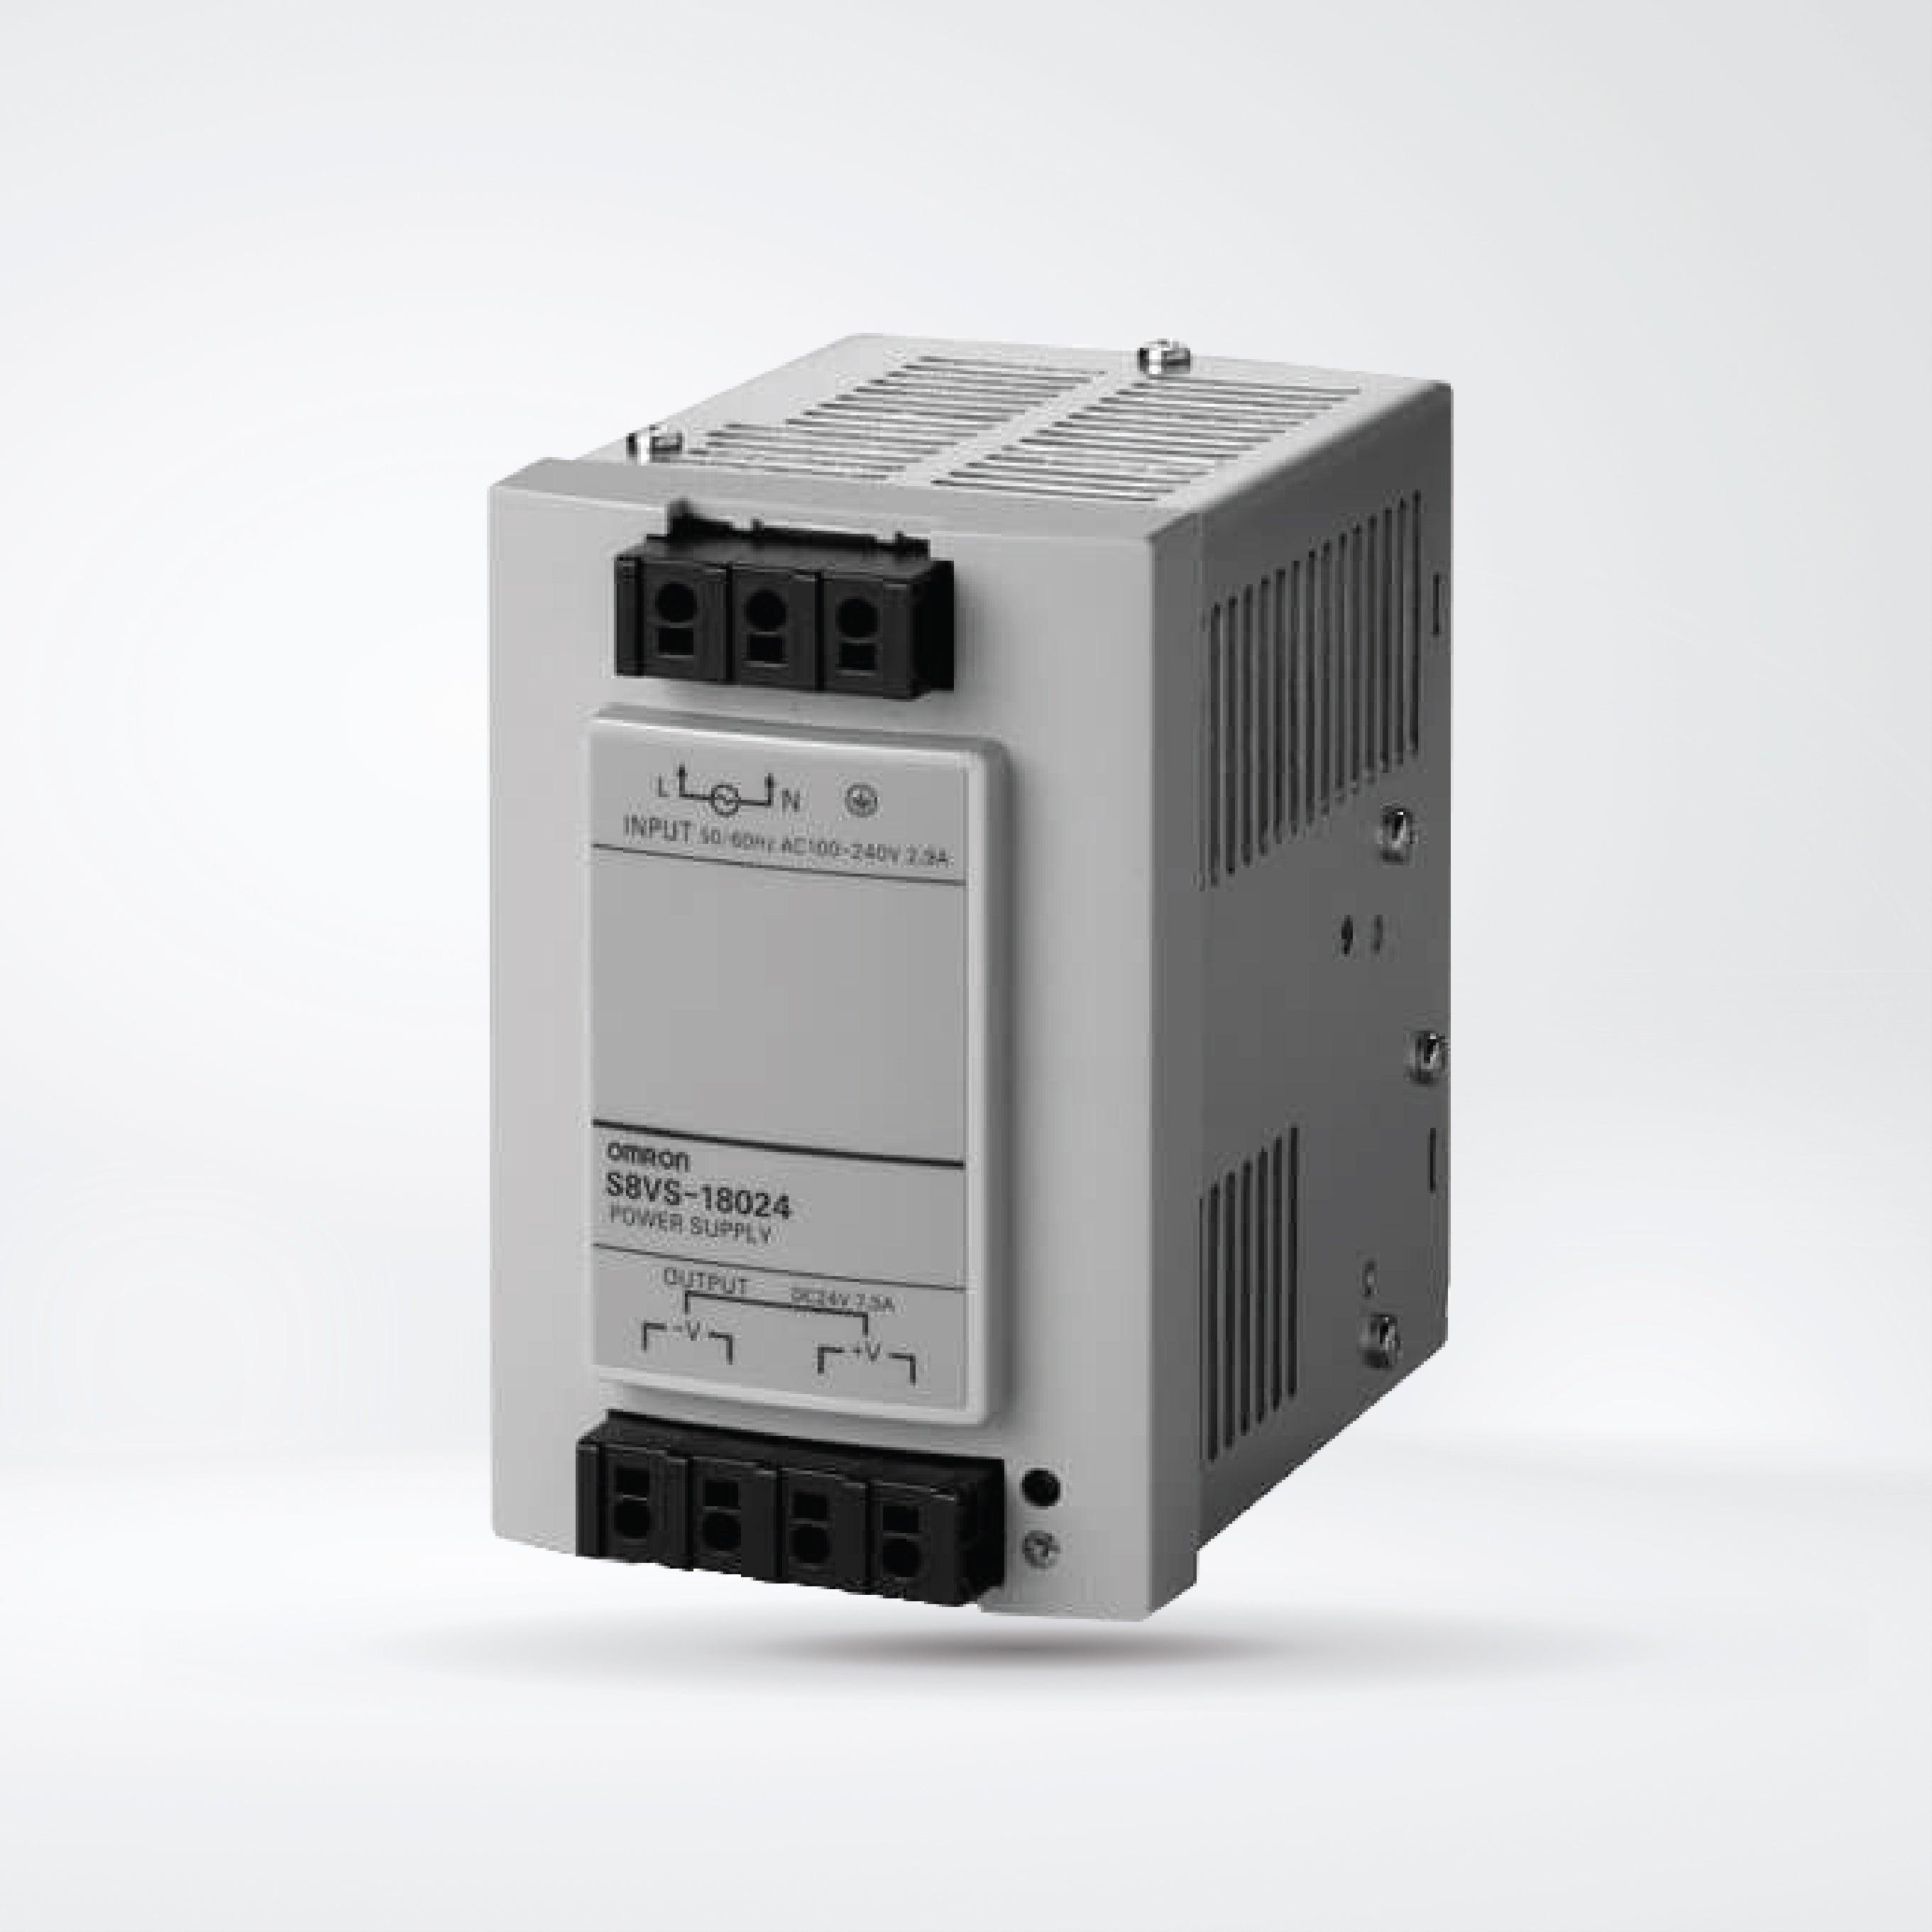 S8VS-18024 Power supply with Screw Terminal Blocks, 180 W, 24 VDC - Riverplus